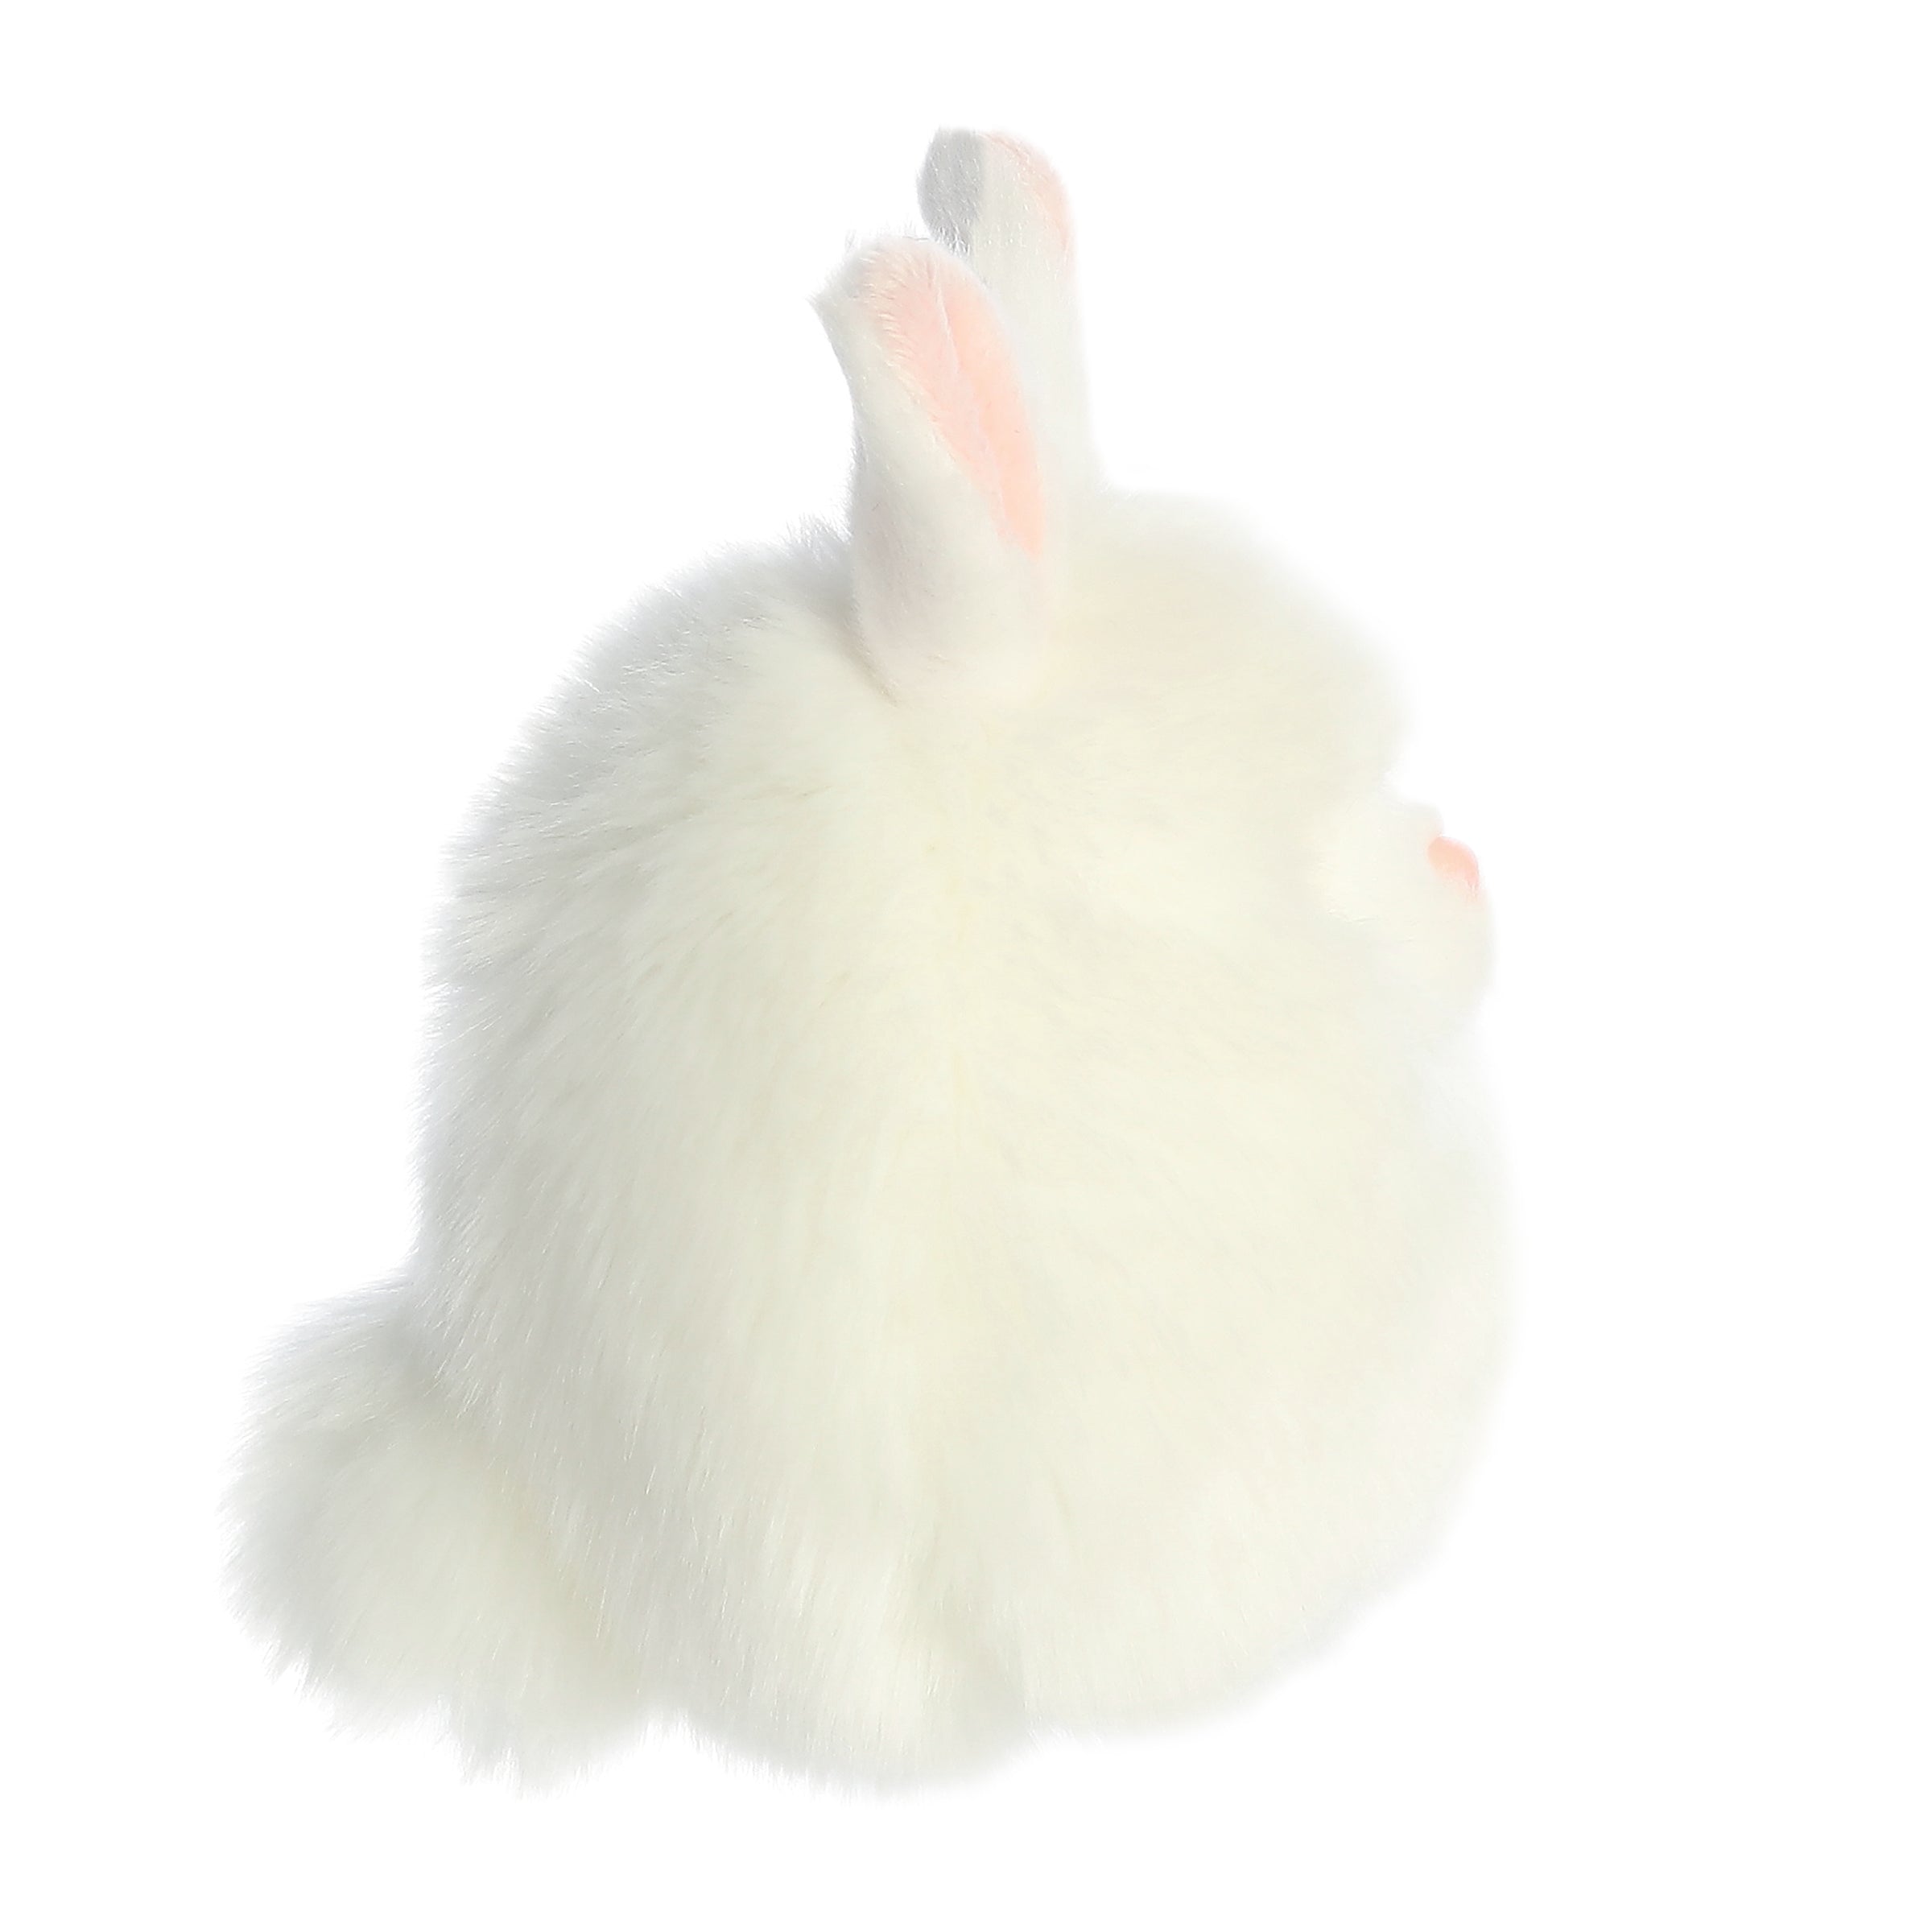 Aurora® - Spring - Bunny Puff - 5" White